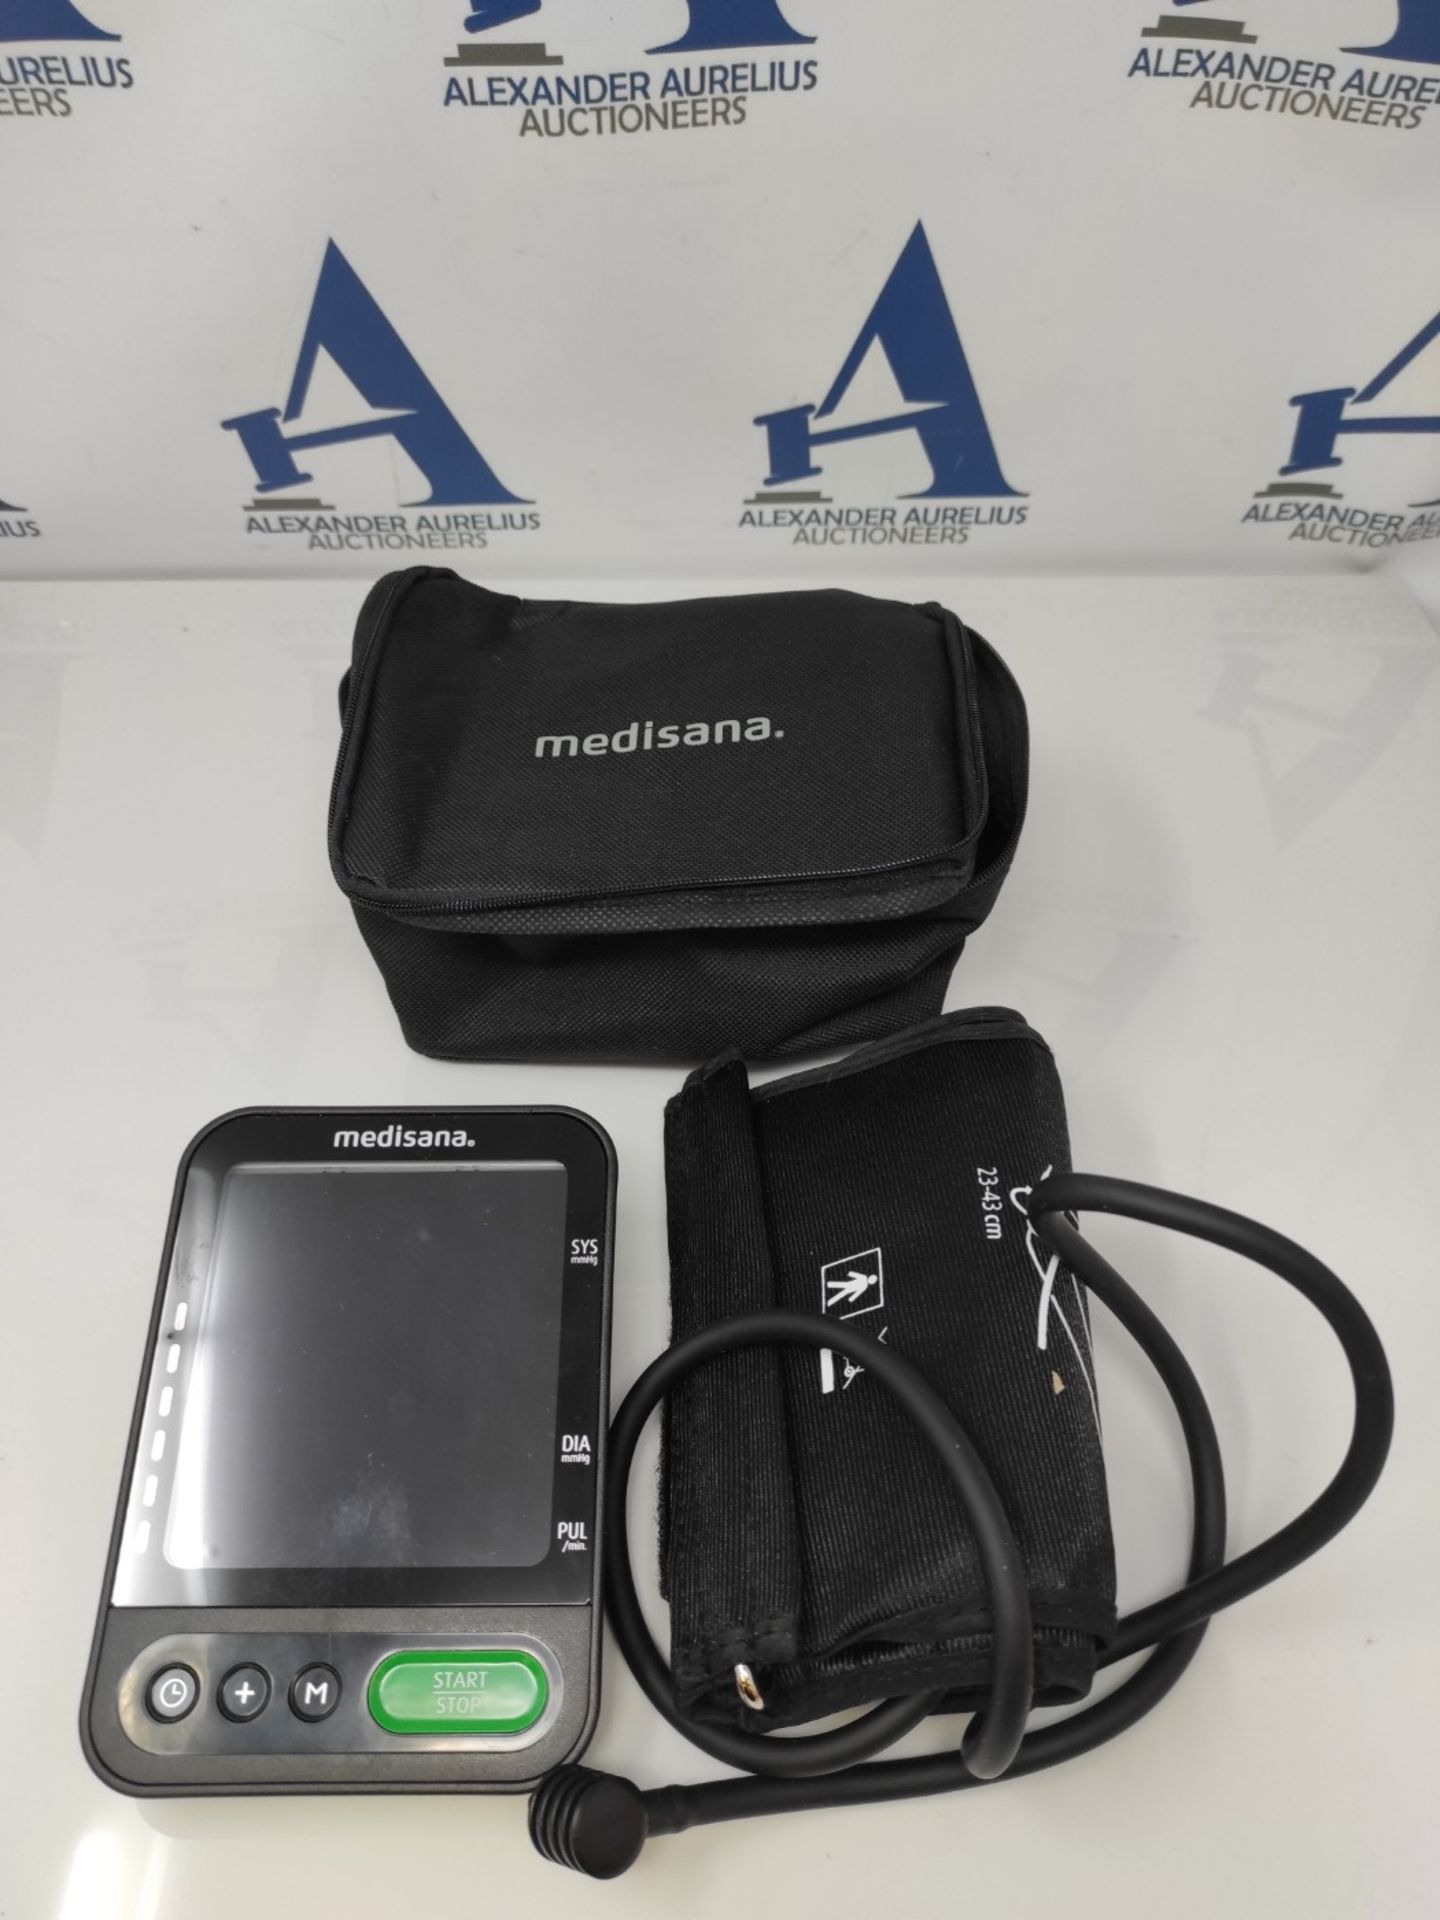 Medisana BU 582 upper arm blood pressure monitor, precise blood pressure and pulse mea - Image 3 of 3